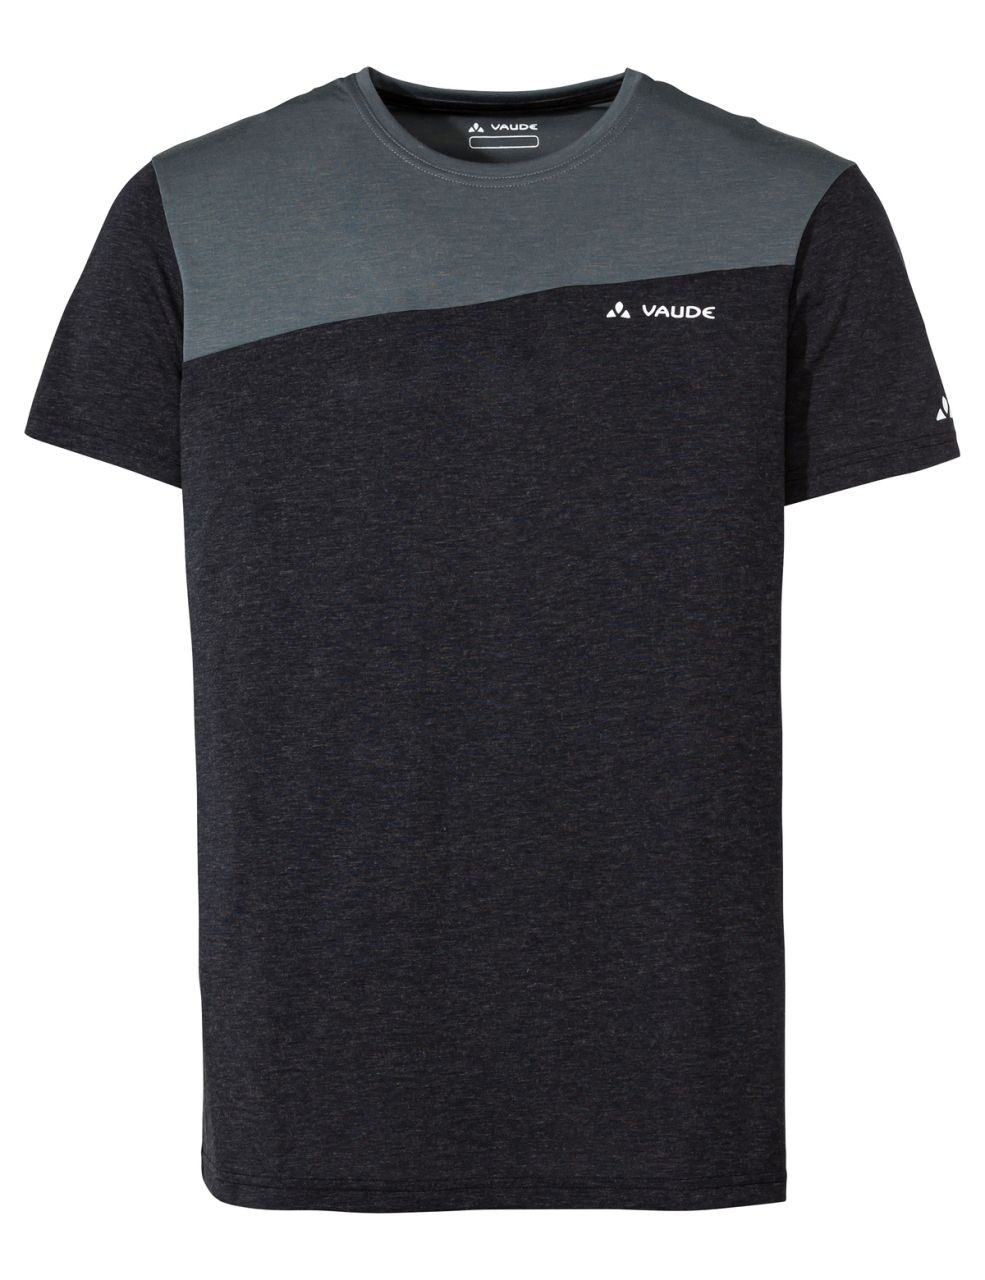 Vaude - Sveit T-Shirt - Camiseta - Hombre